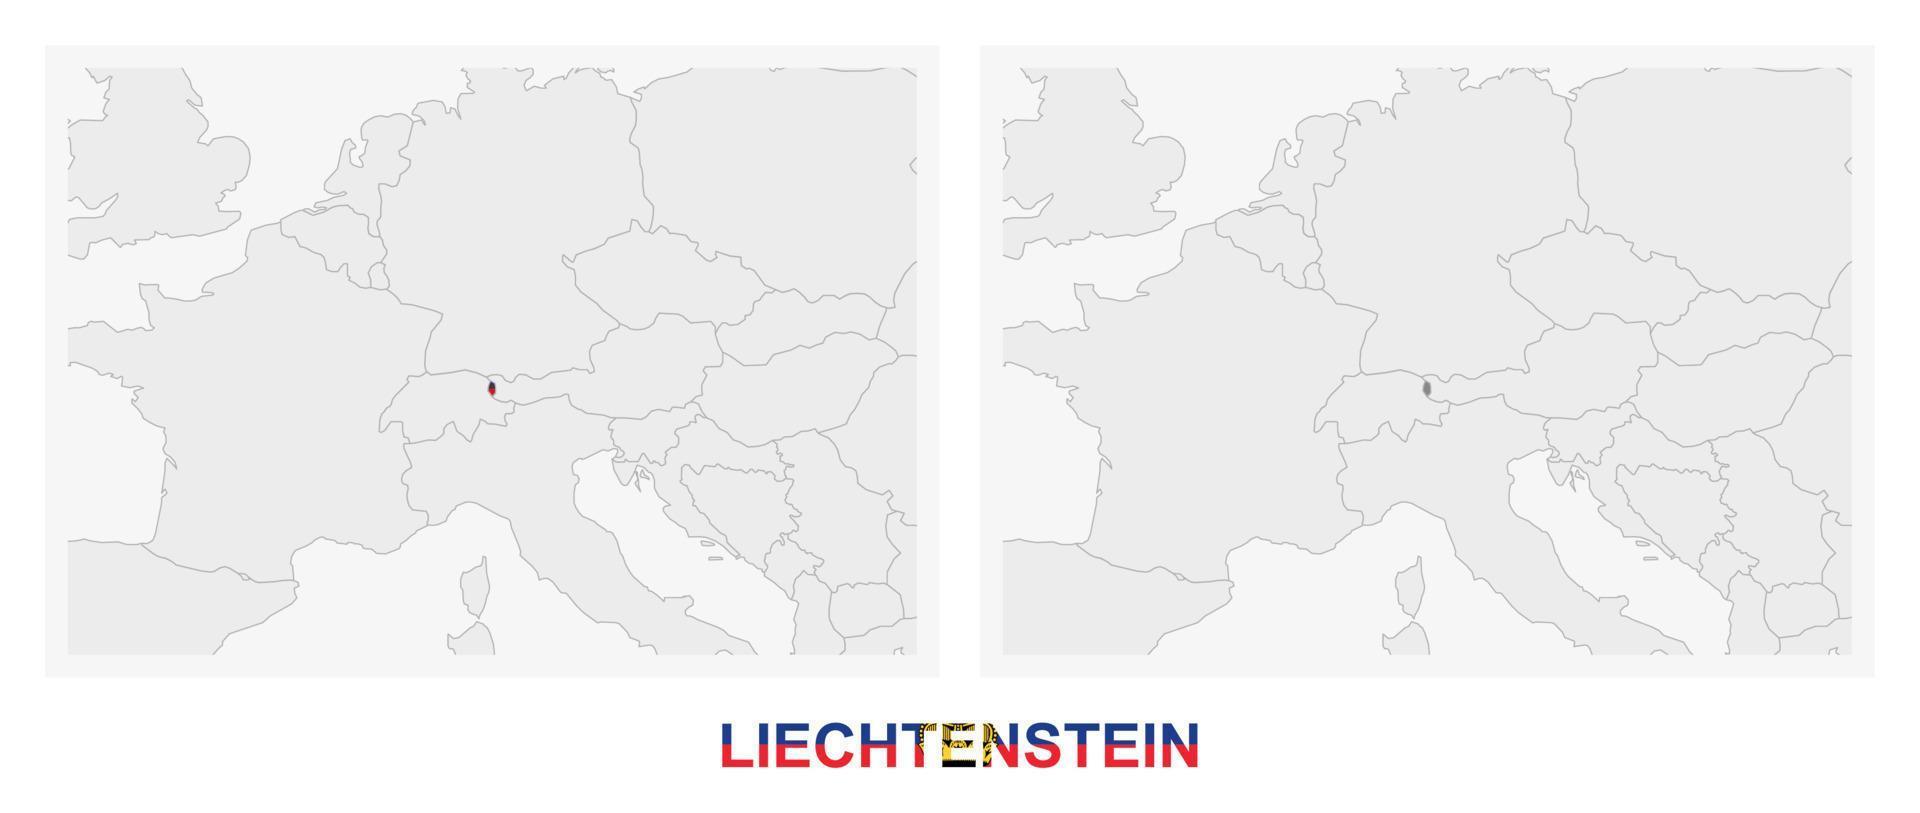 duas versões do mapa de liechtenstein, com a bandeira de liechtenstein e destacada em cinza escuro. vetor